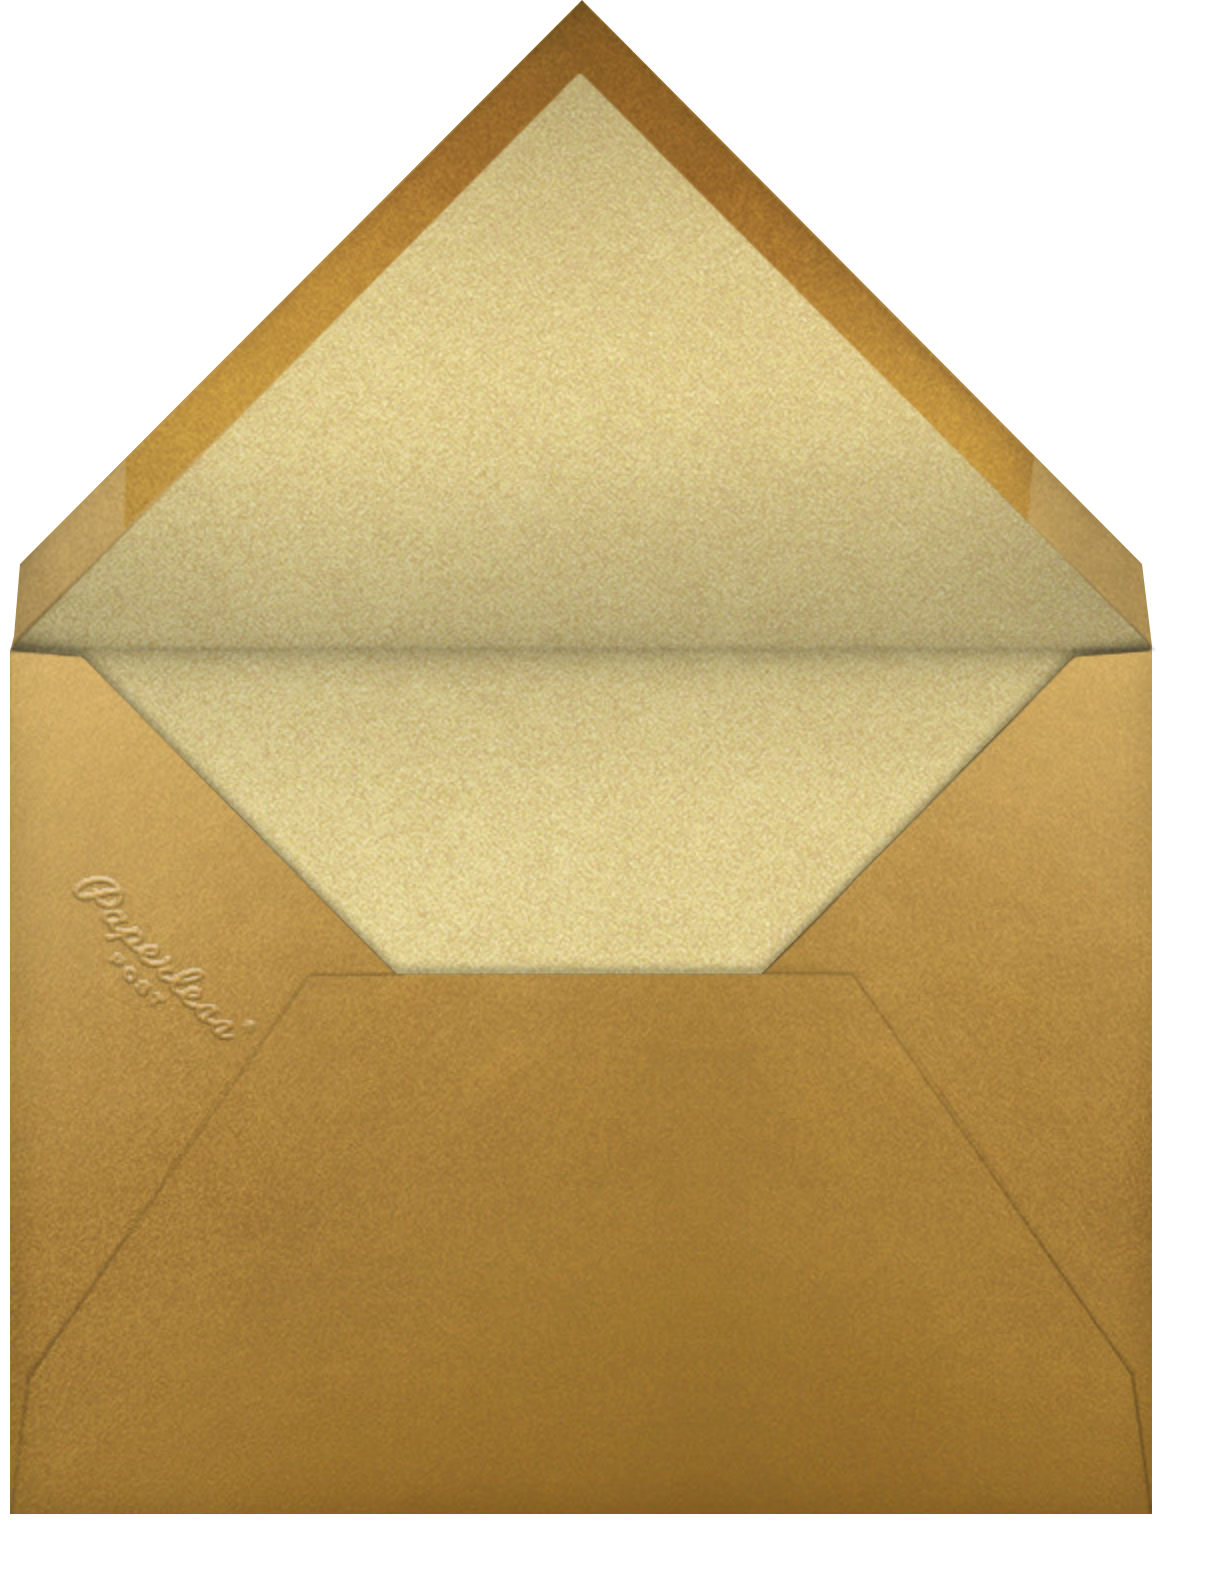 Scrapbooked - Paperless Post - Envelope